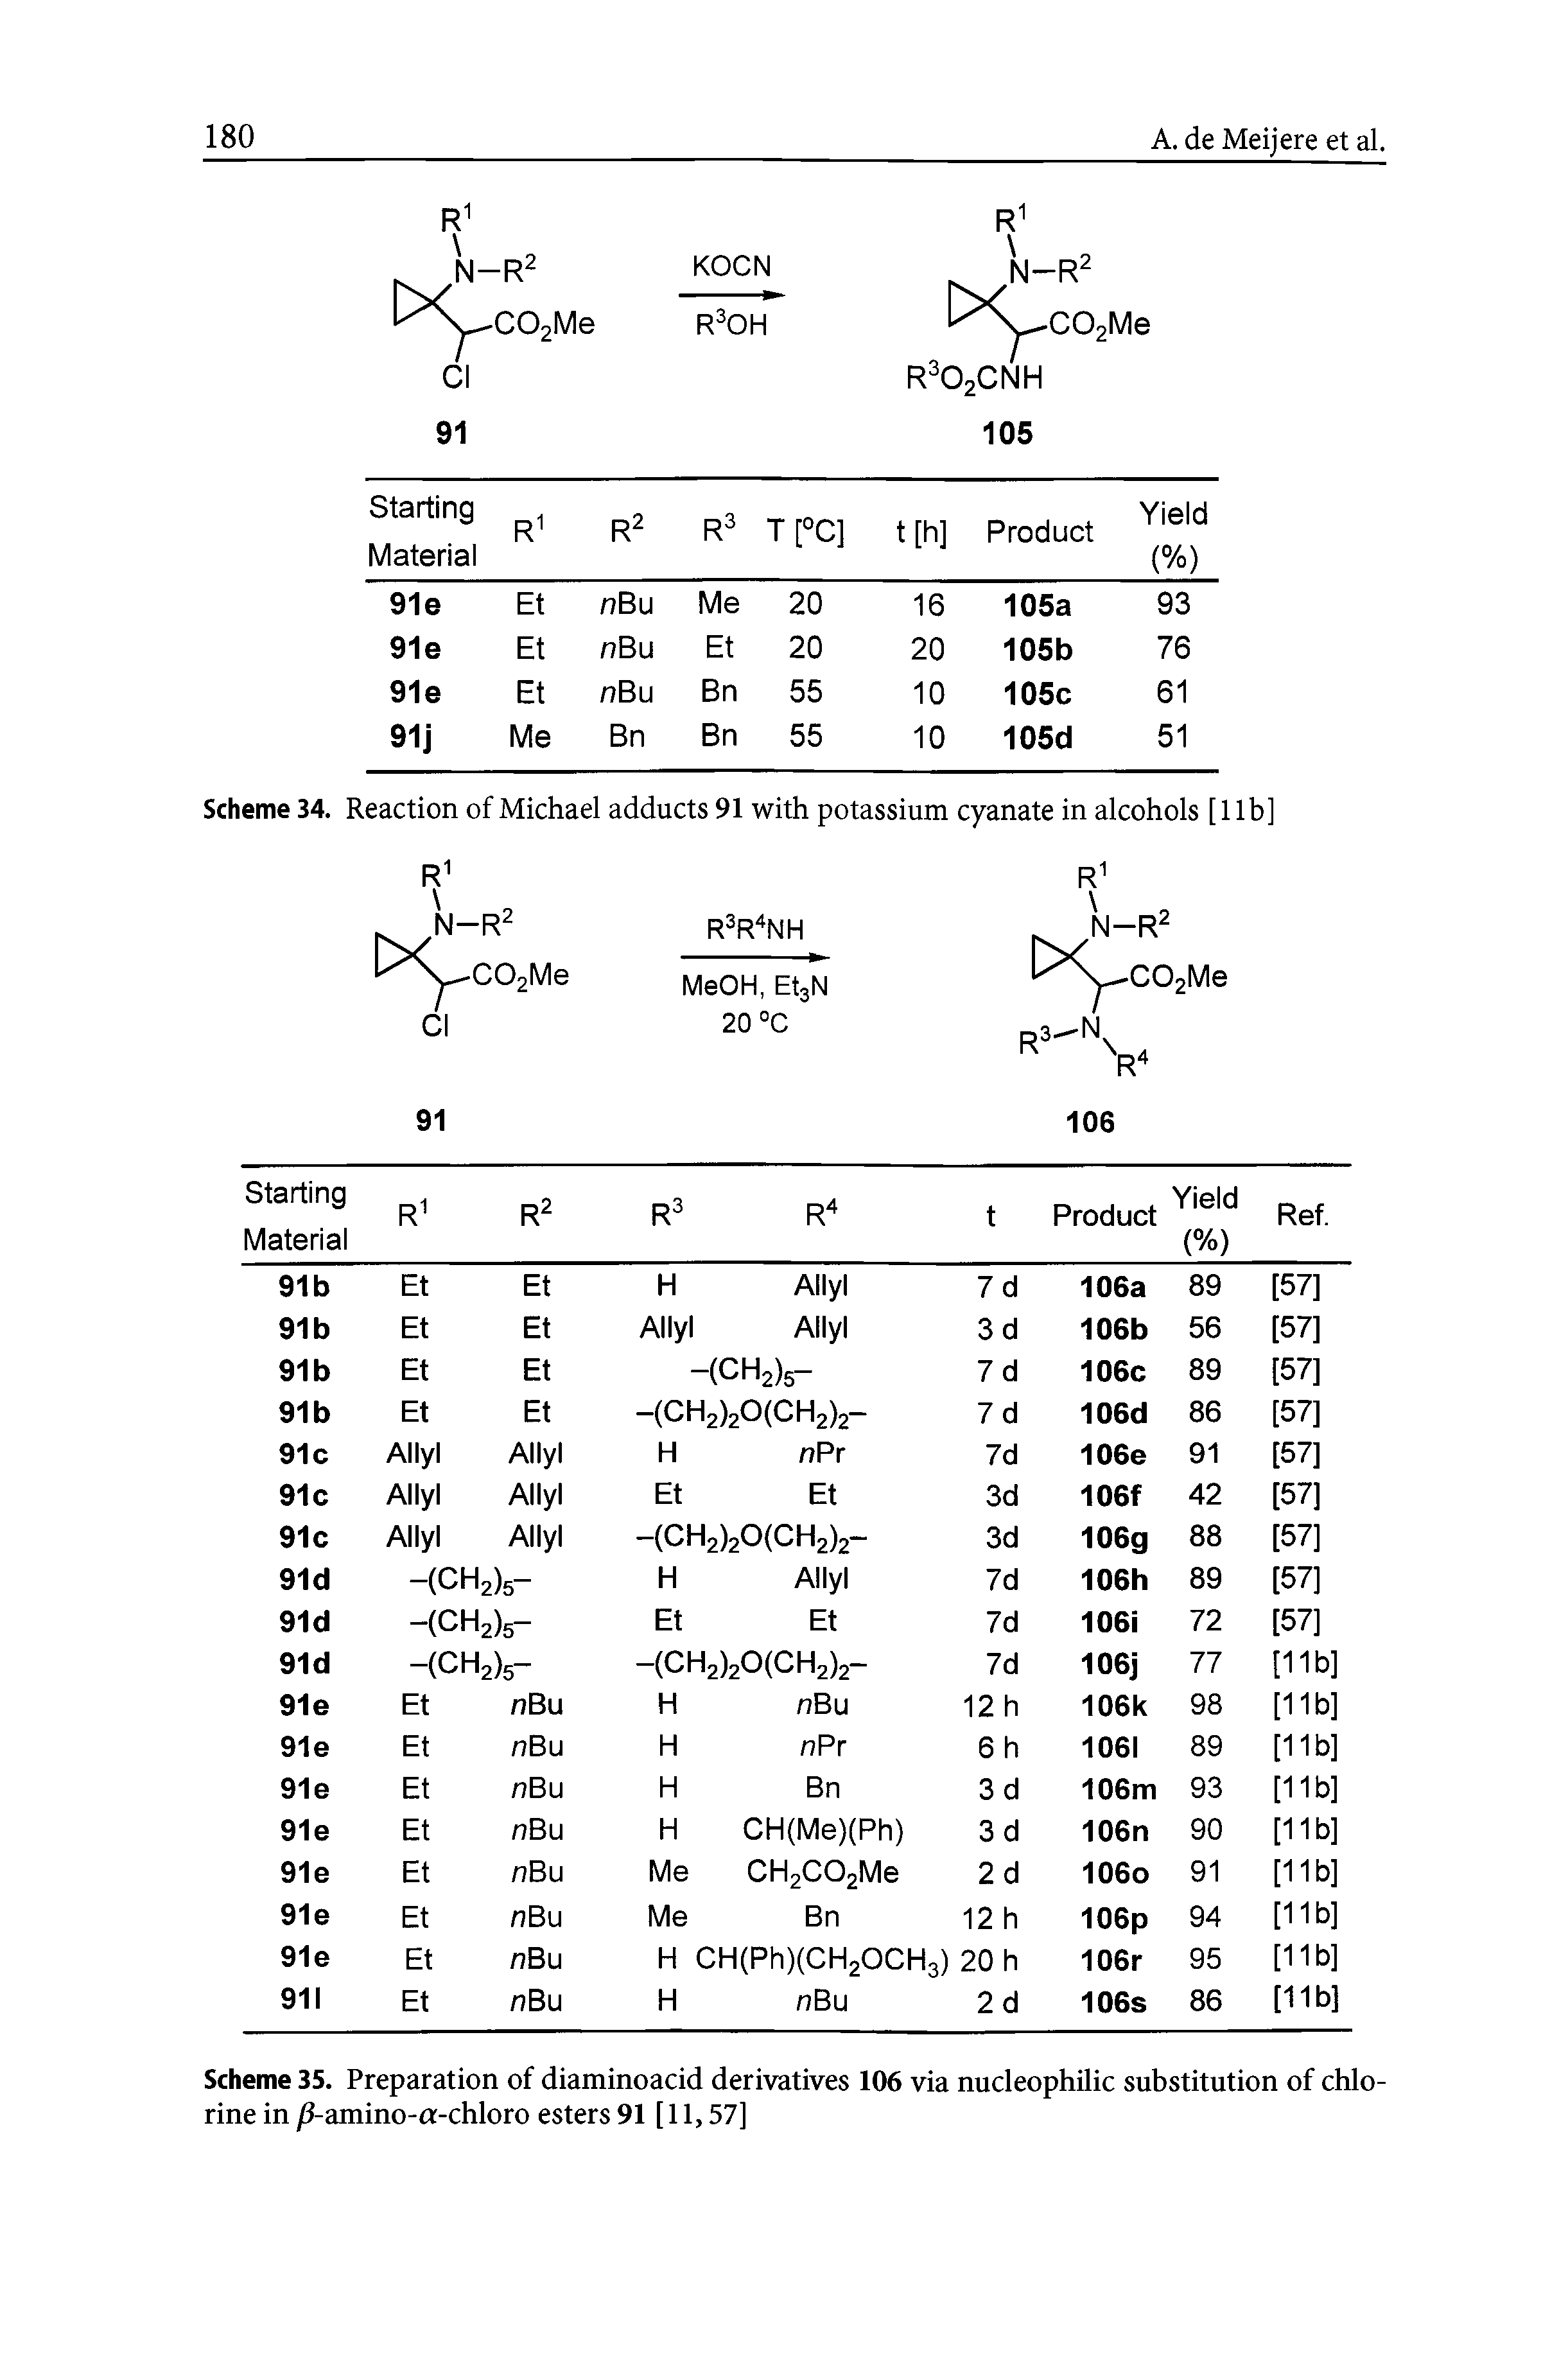 Scheme 35. Preparation of diaminoacid derivatives 106 via nucleophilic substitution of chlorine in )8-amino-a-chloro esters 91 [11,57]...